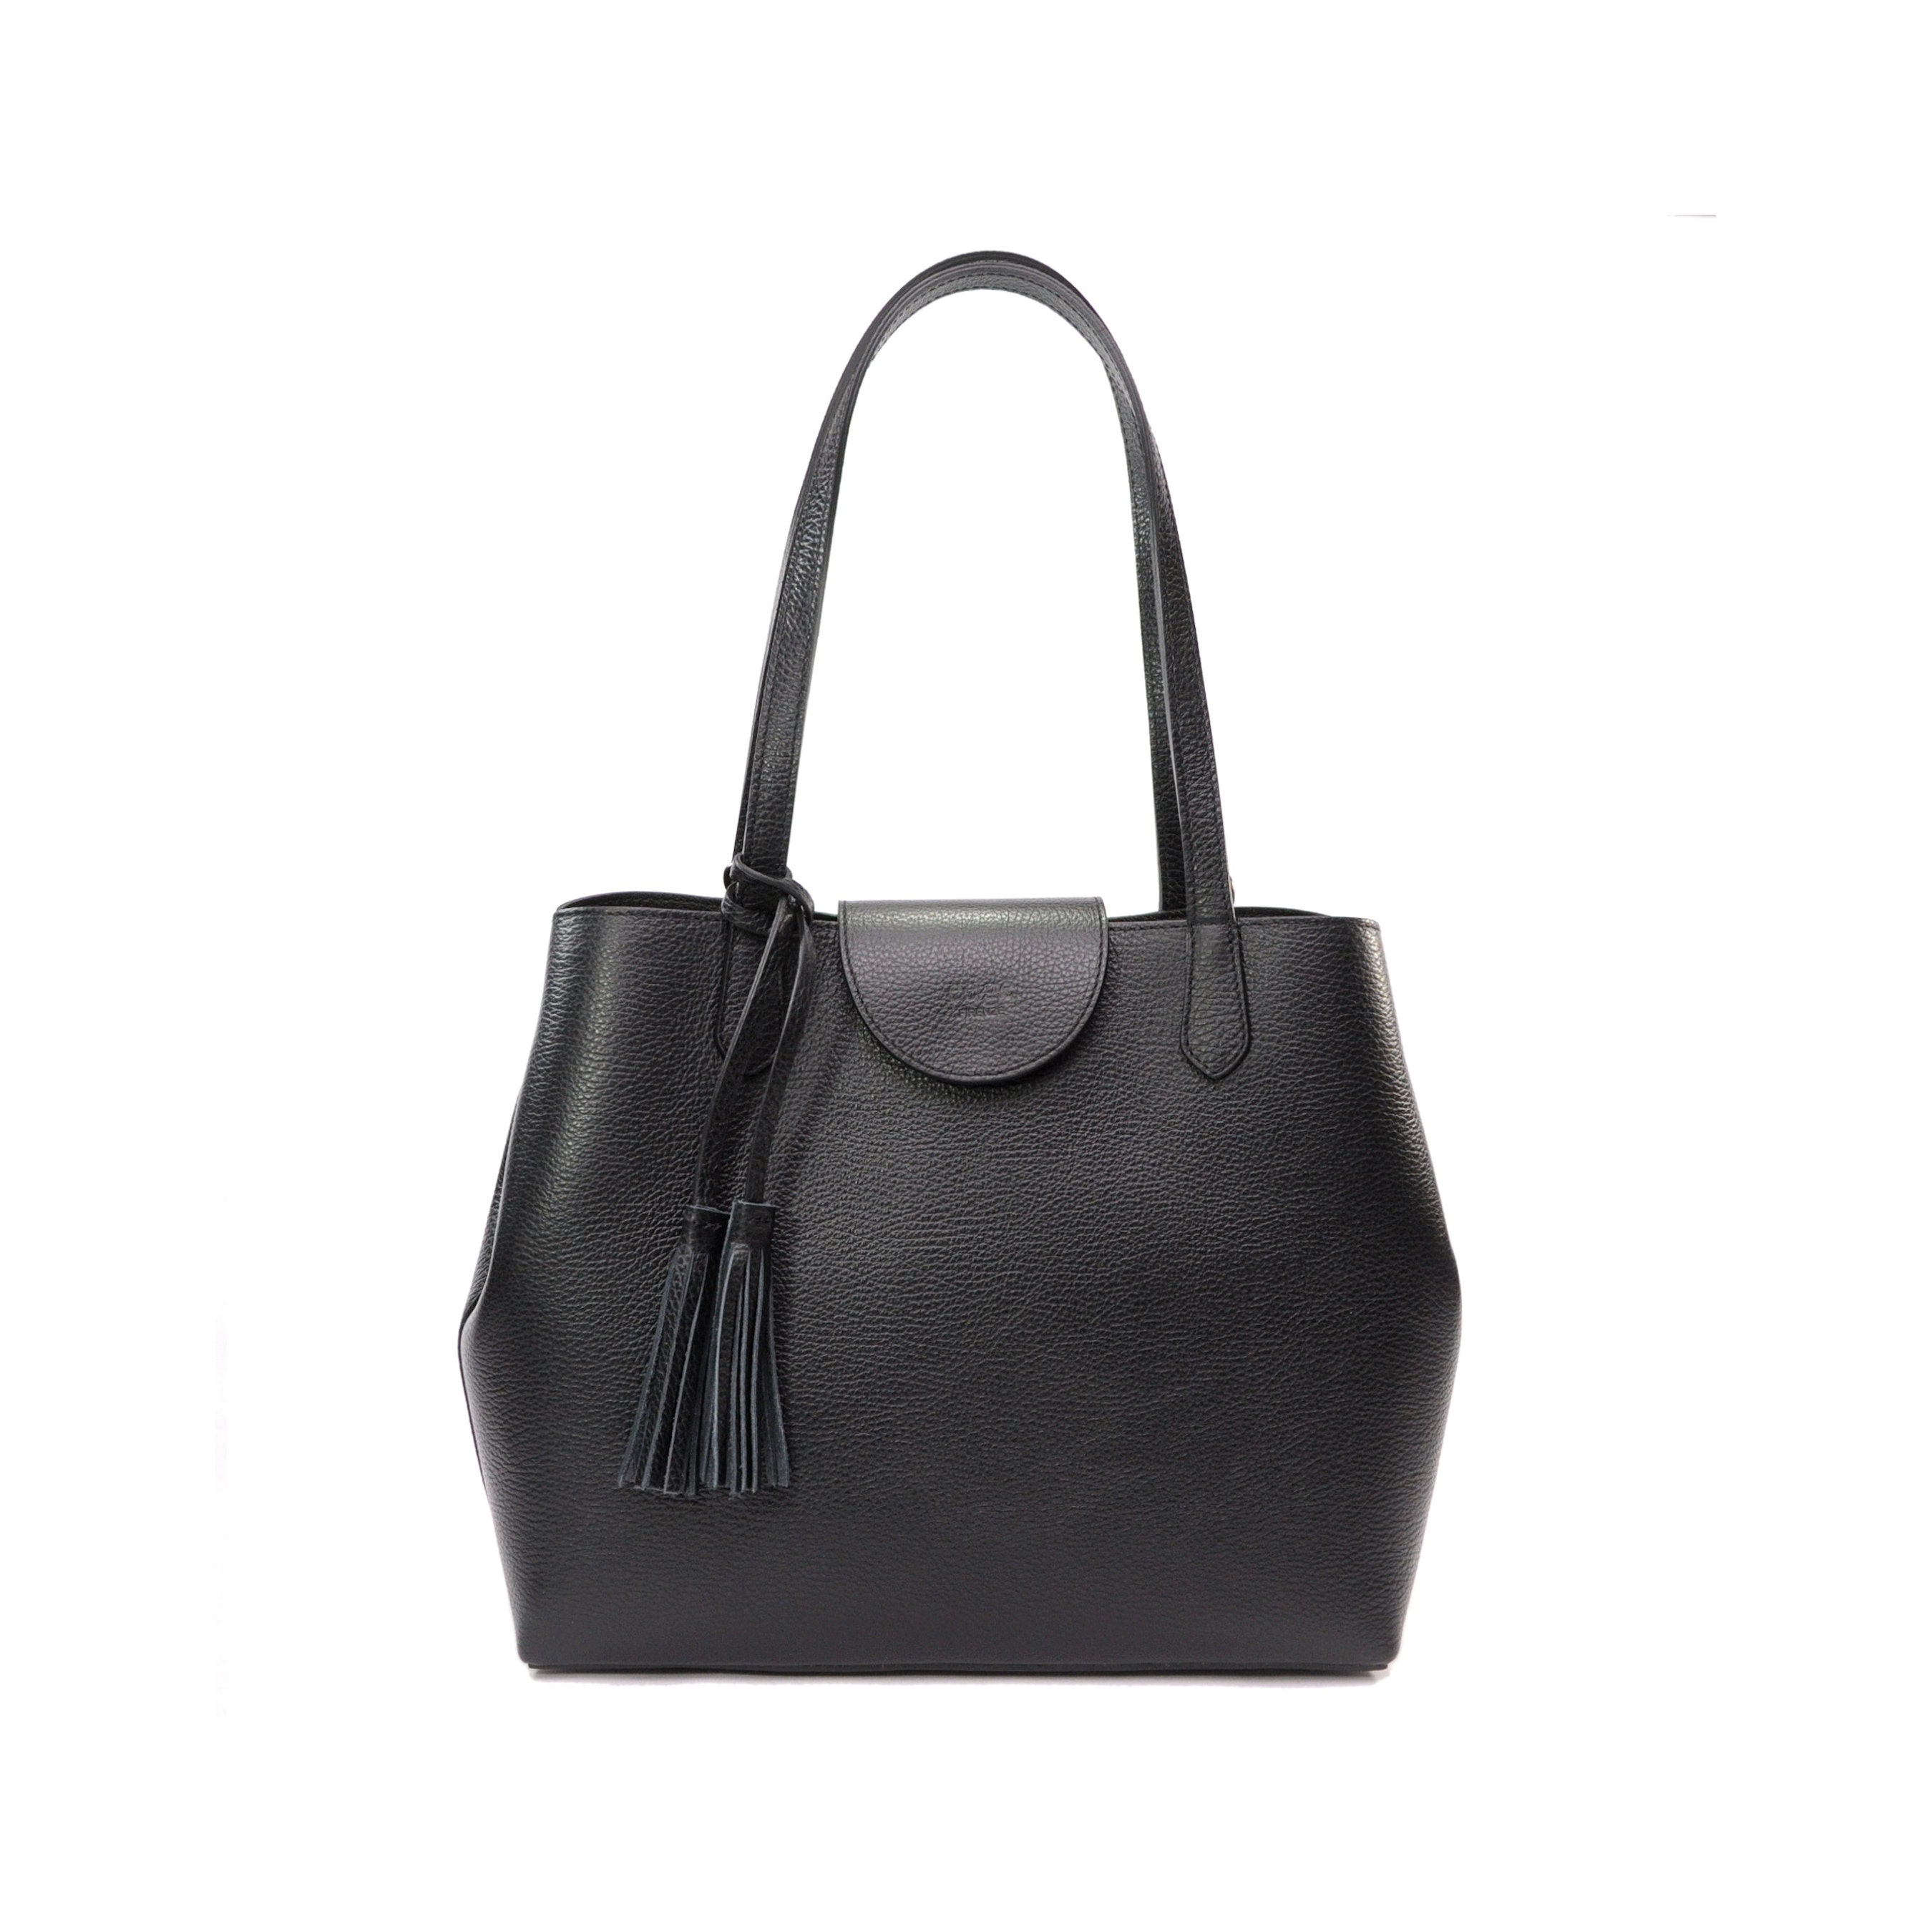 Kate Spade - Authenticated Handbag - Cloth Black for Women, Very Good Condition